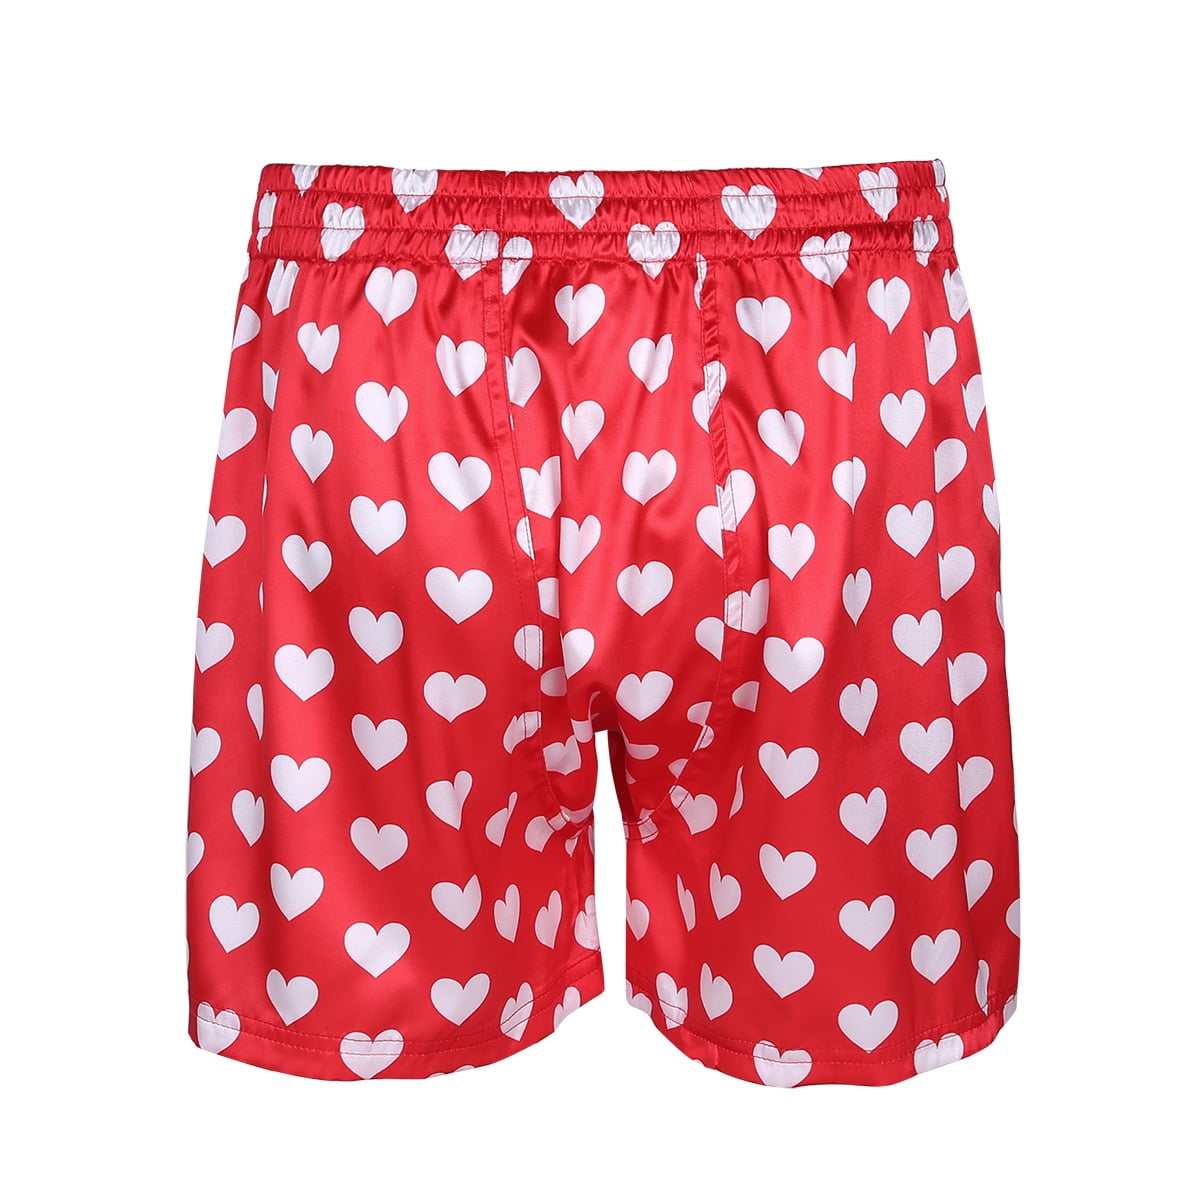 YONGHS Men's Silky Satin Boxers Shorts Underwear Sports Panties Swimwear  M-3XL A Heart Black XL 